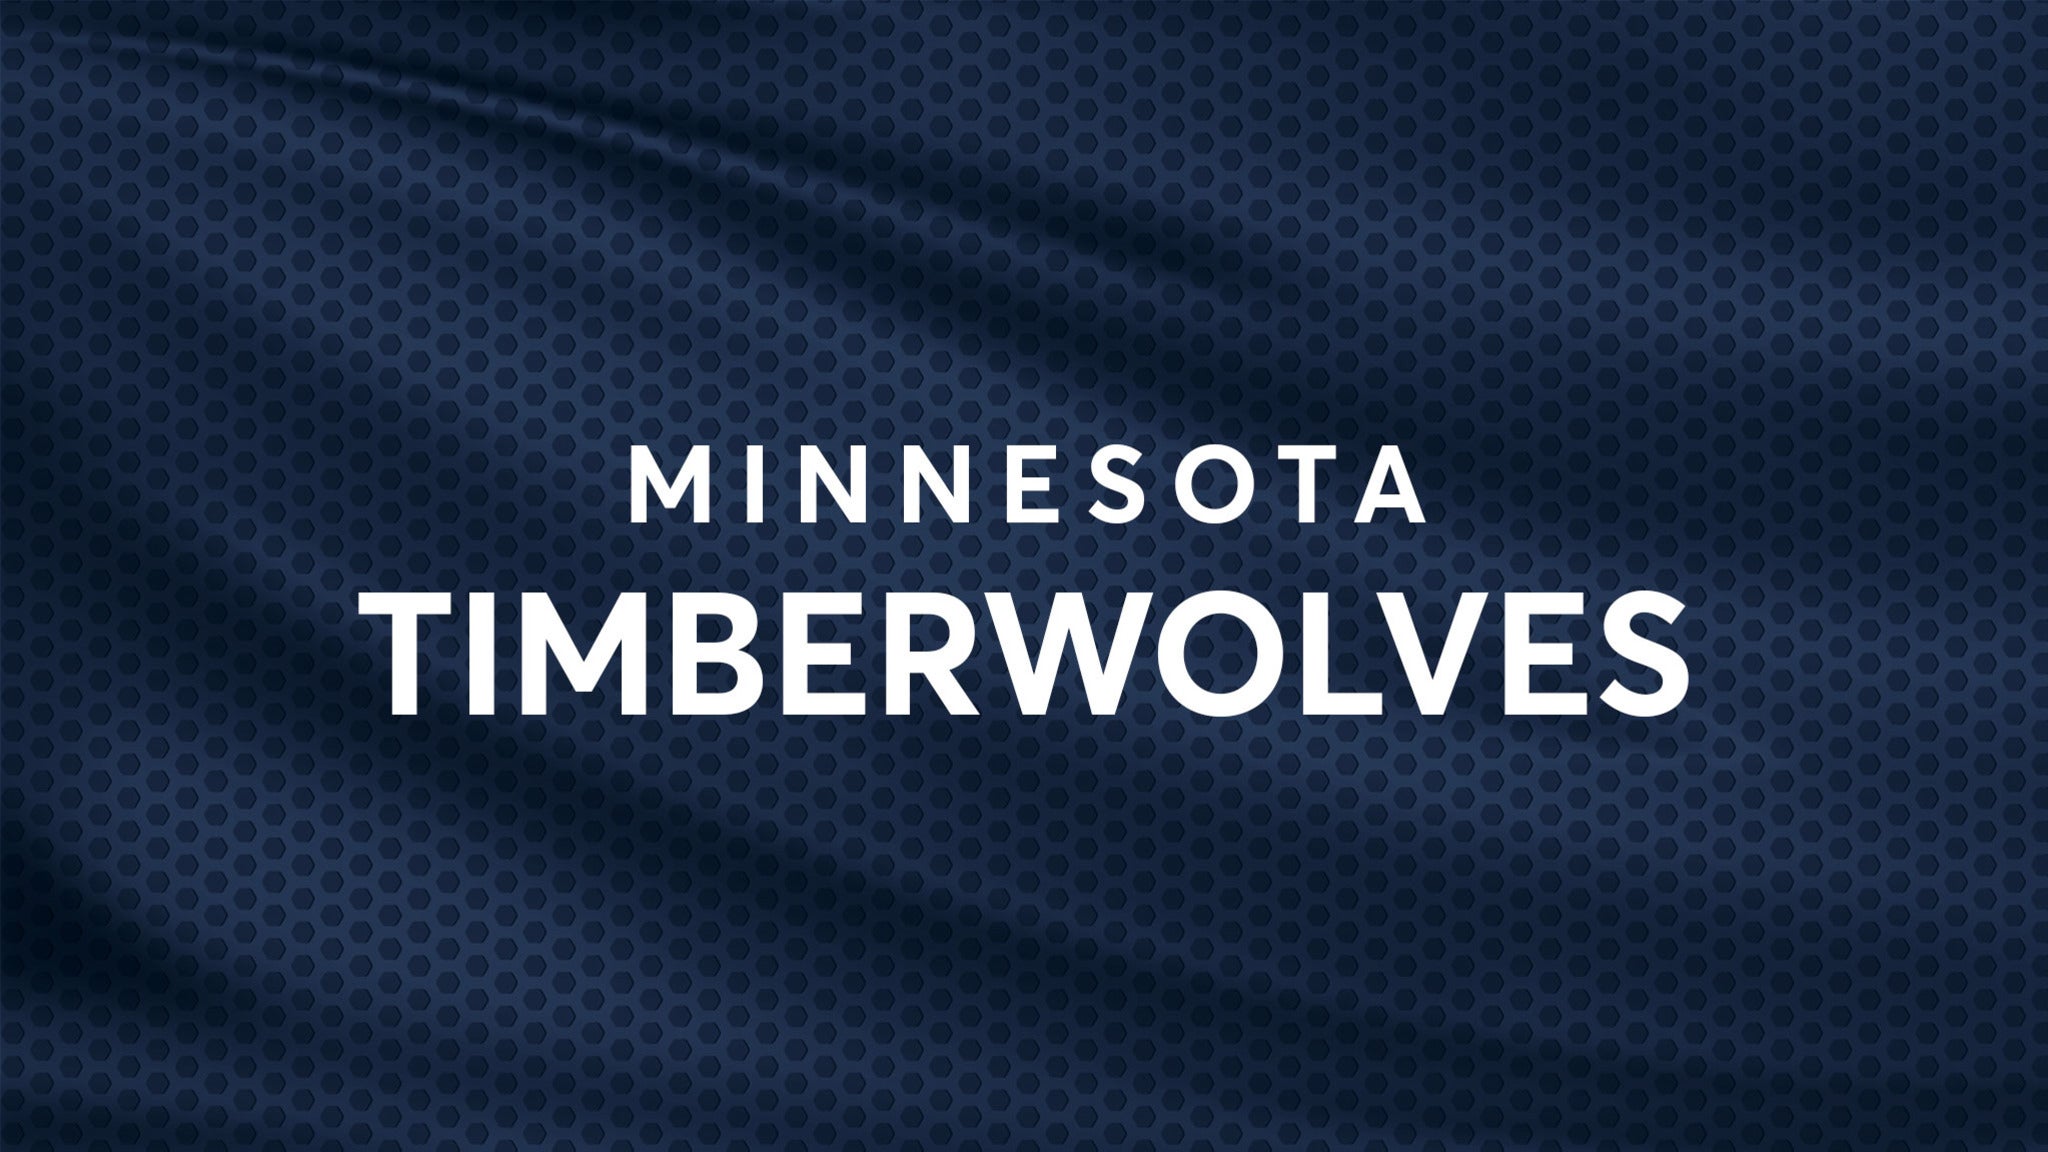 Minnesota Timberwolves vs. Washington Wizards